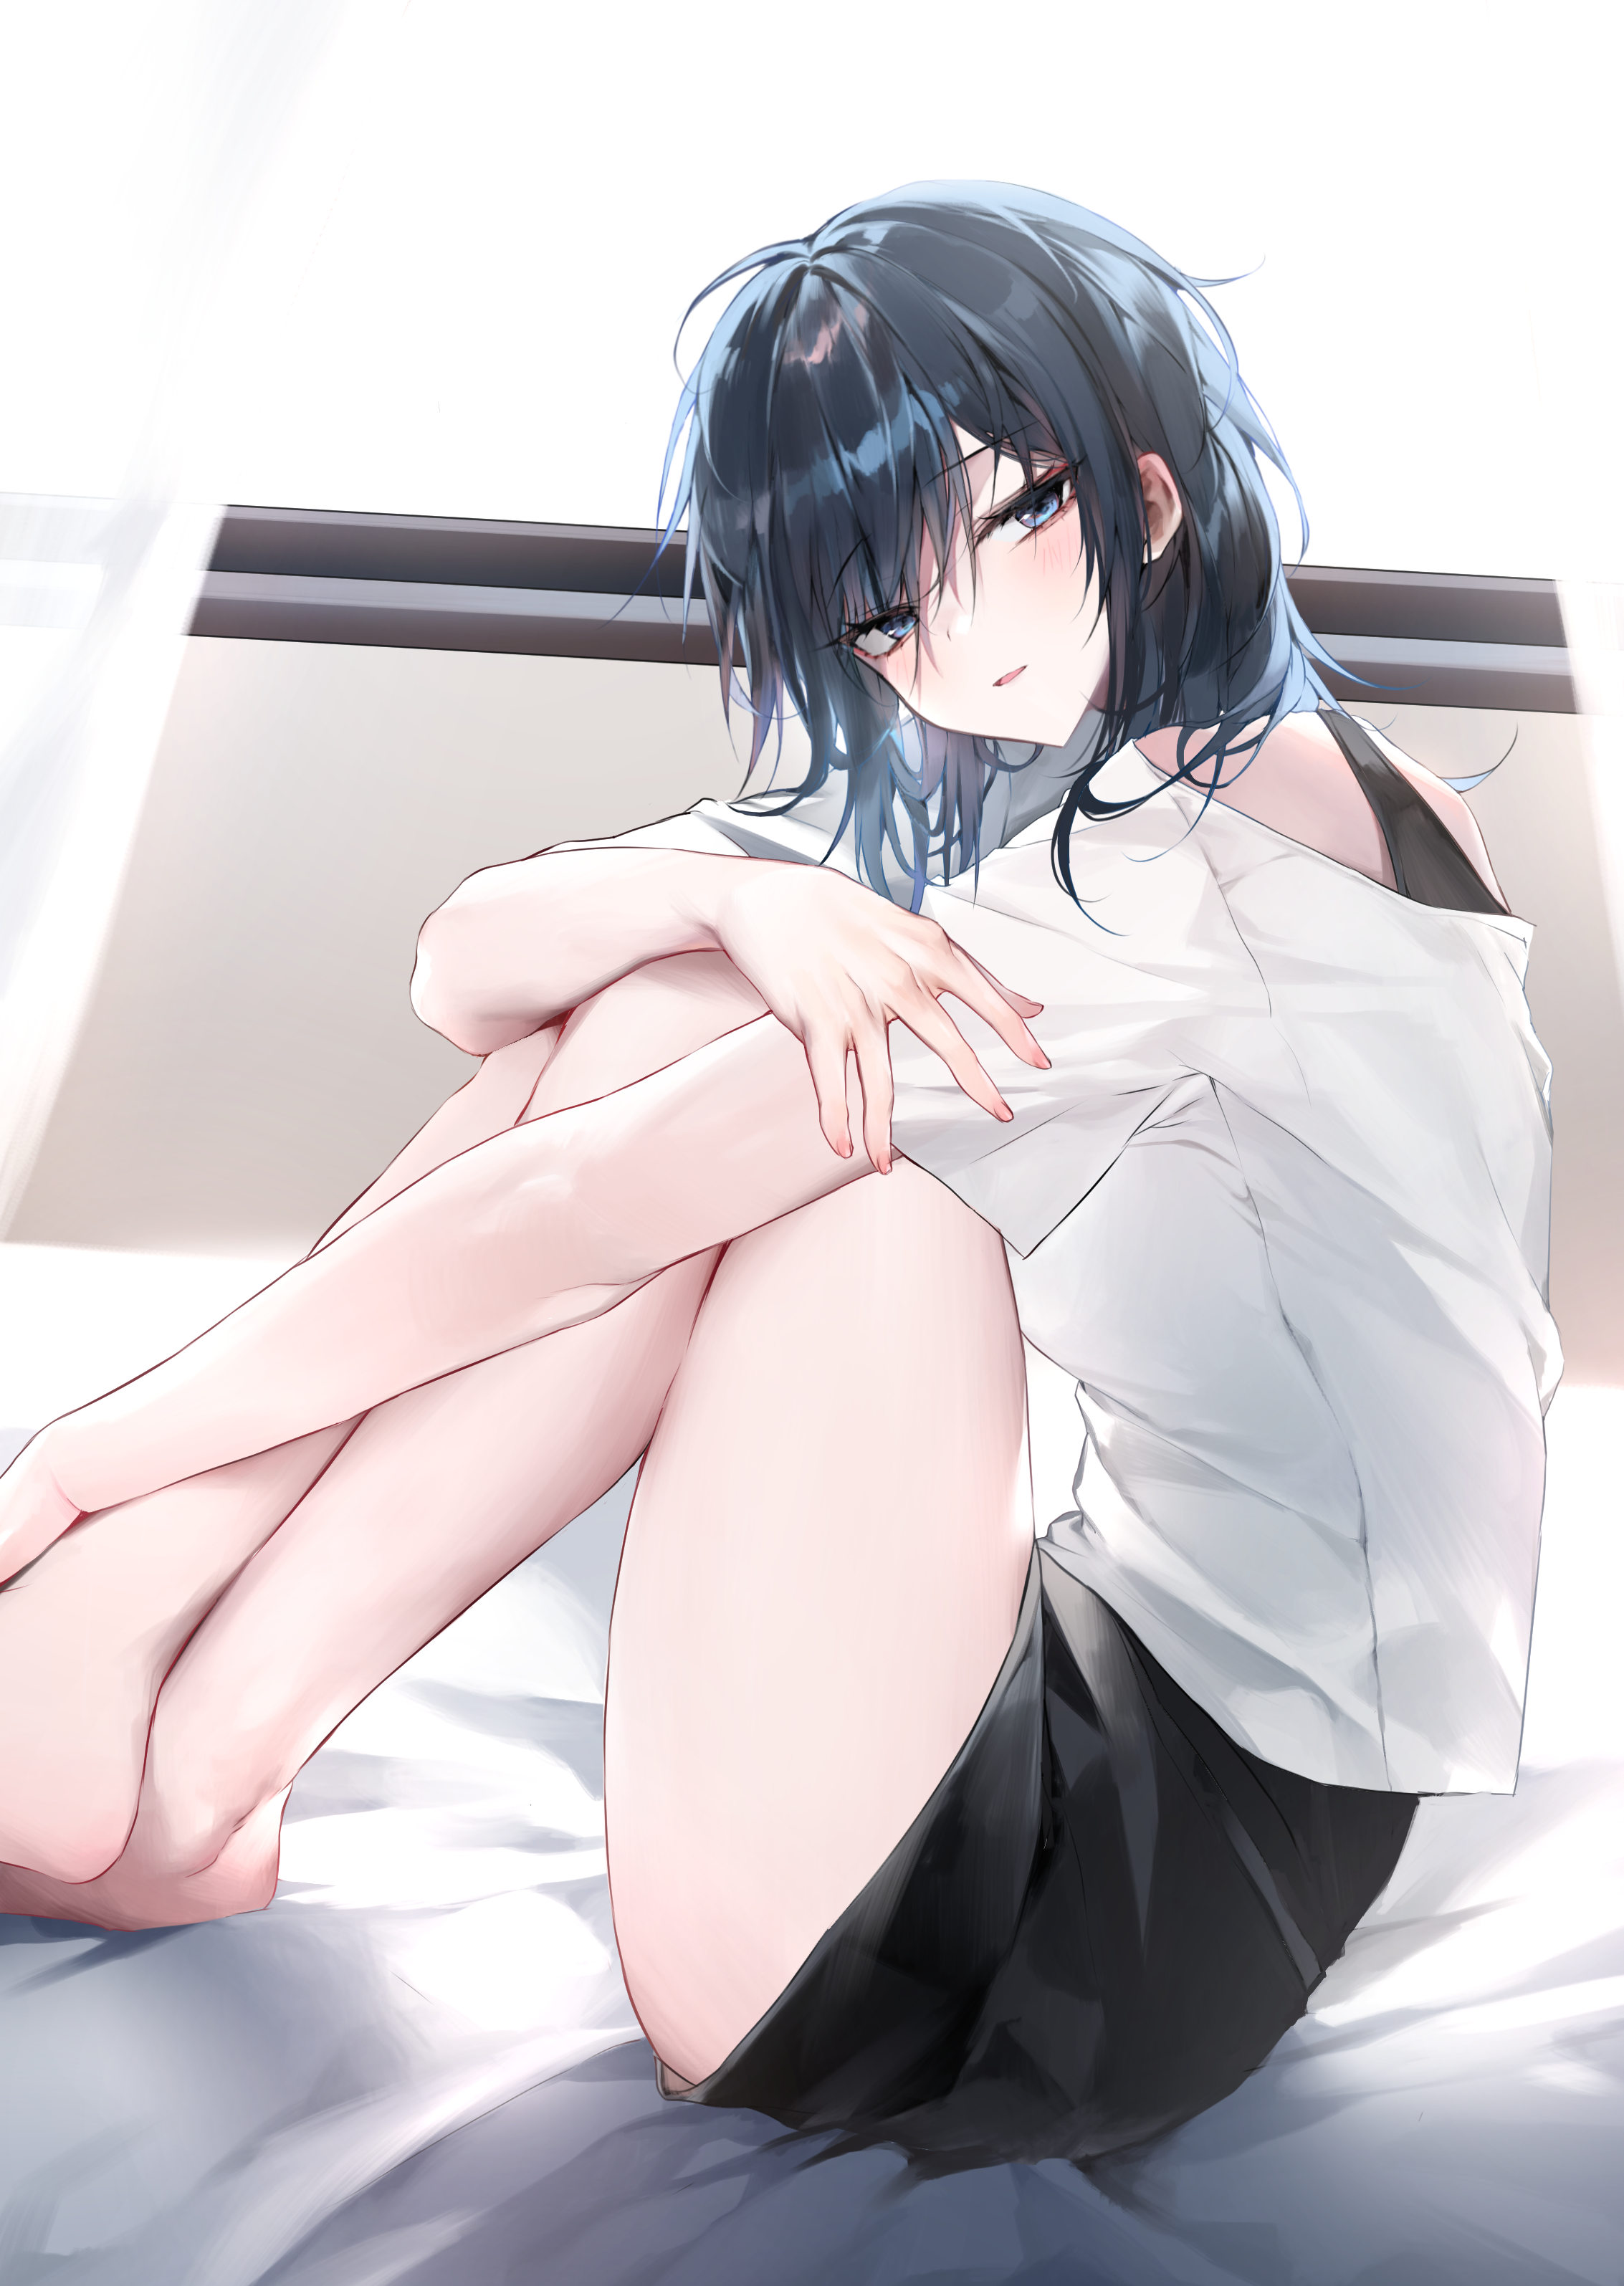 Anime Anime Girls Dark Hair Legs Sitting Looking At Viewer Shoulder Length Hair Barefoot Bara Artwor 2266x3190